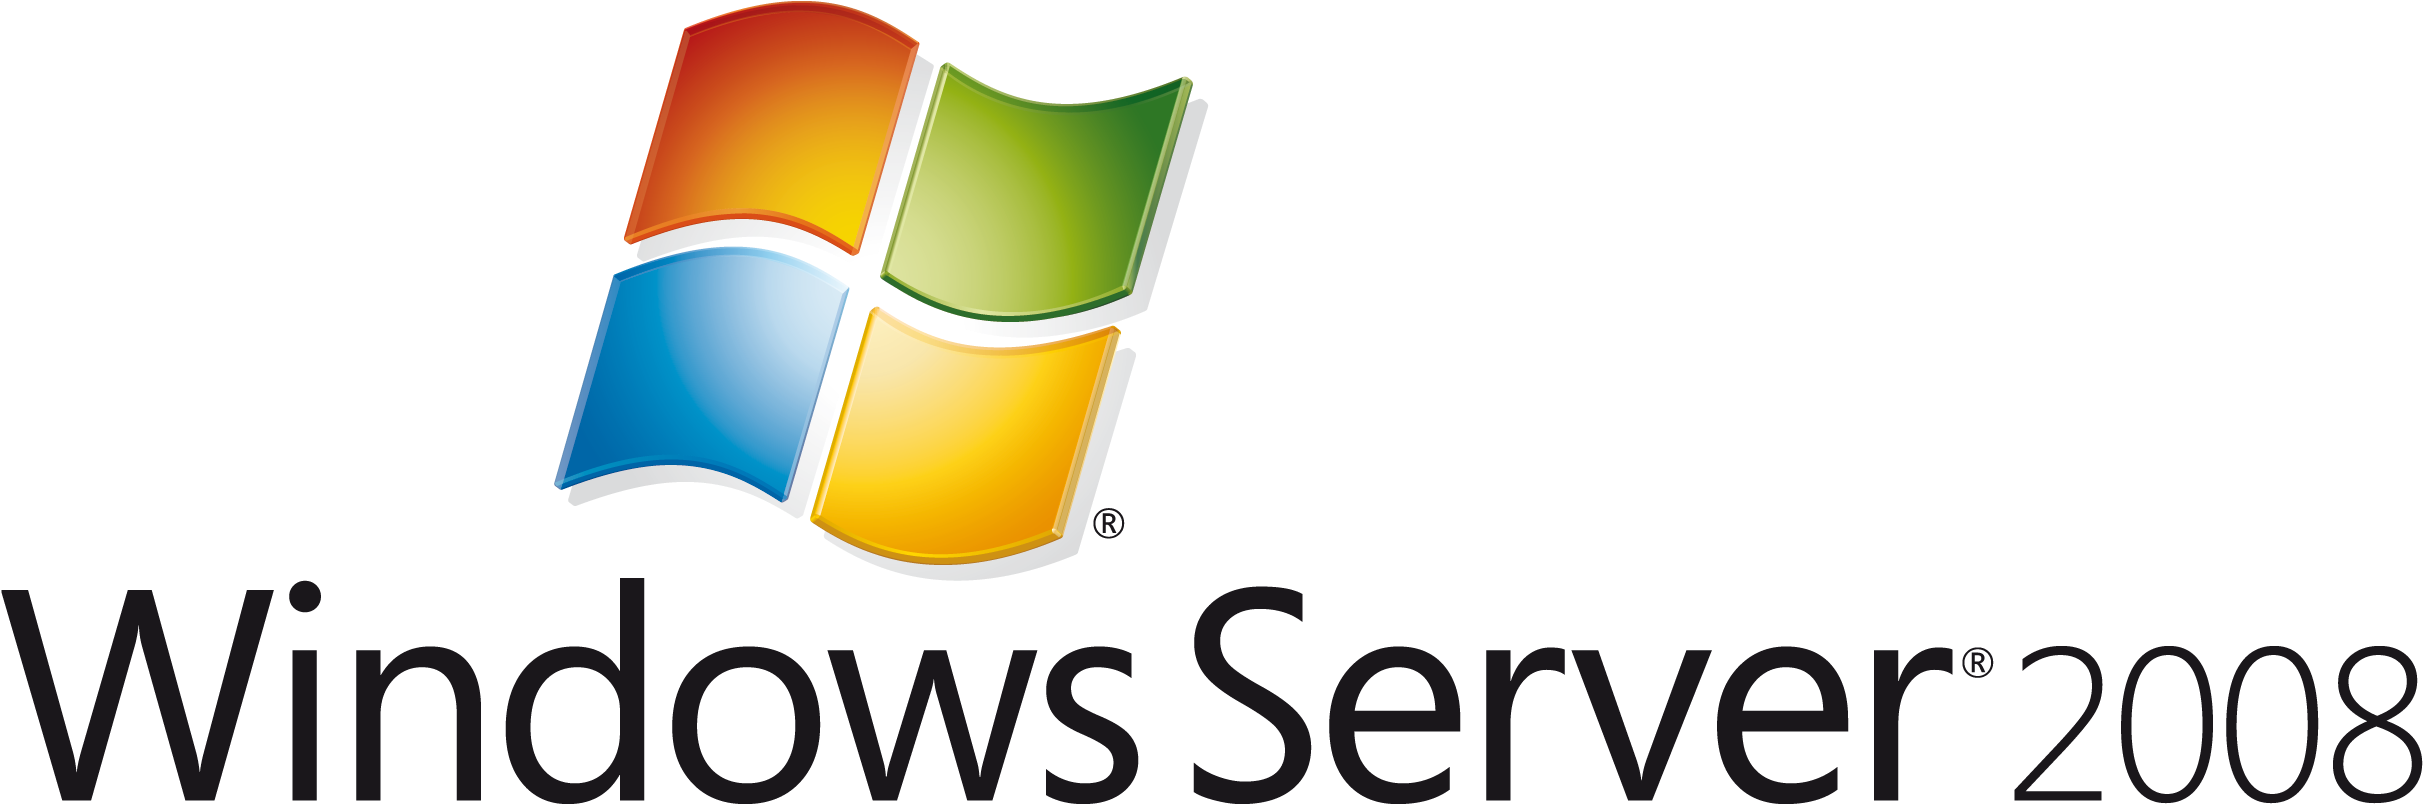 Windows Server 2008 Web - Windows Server 2008 Icon (2452x803)